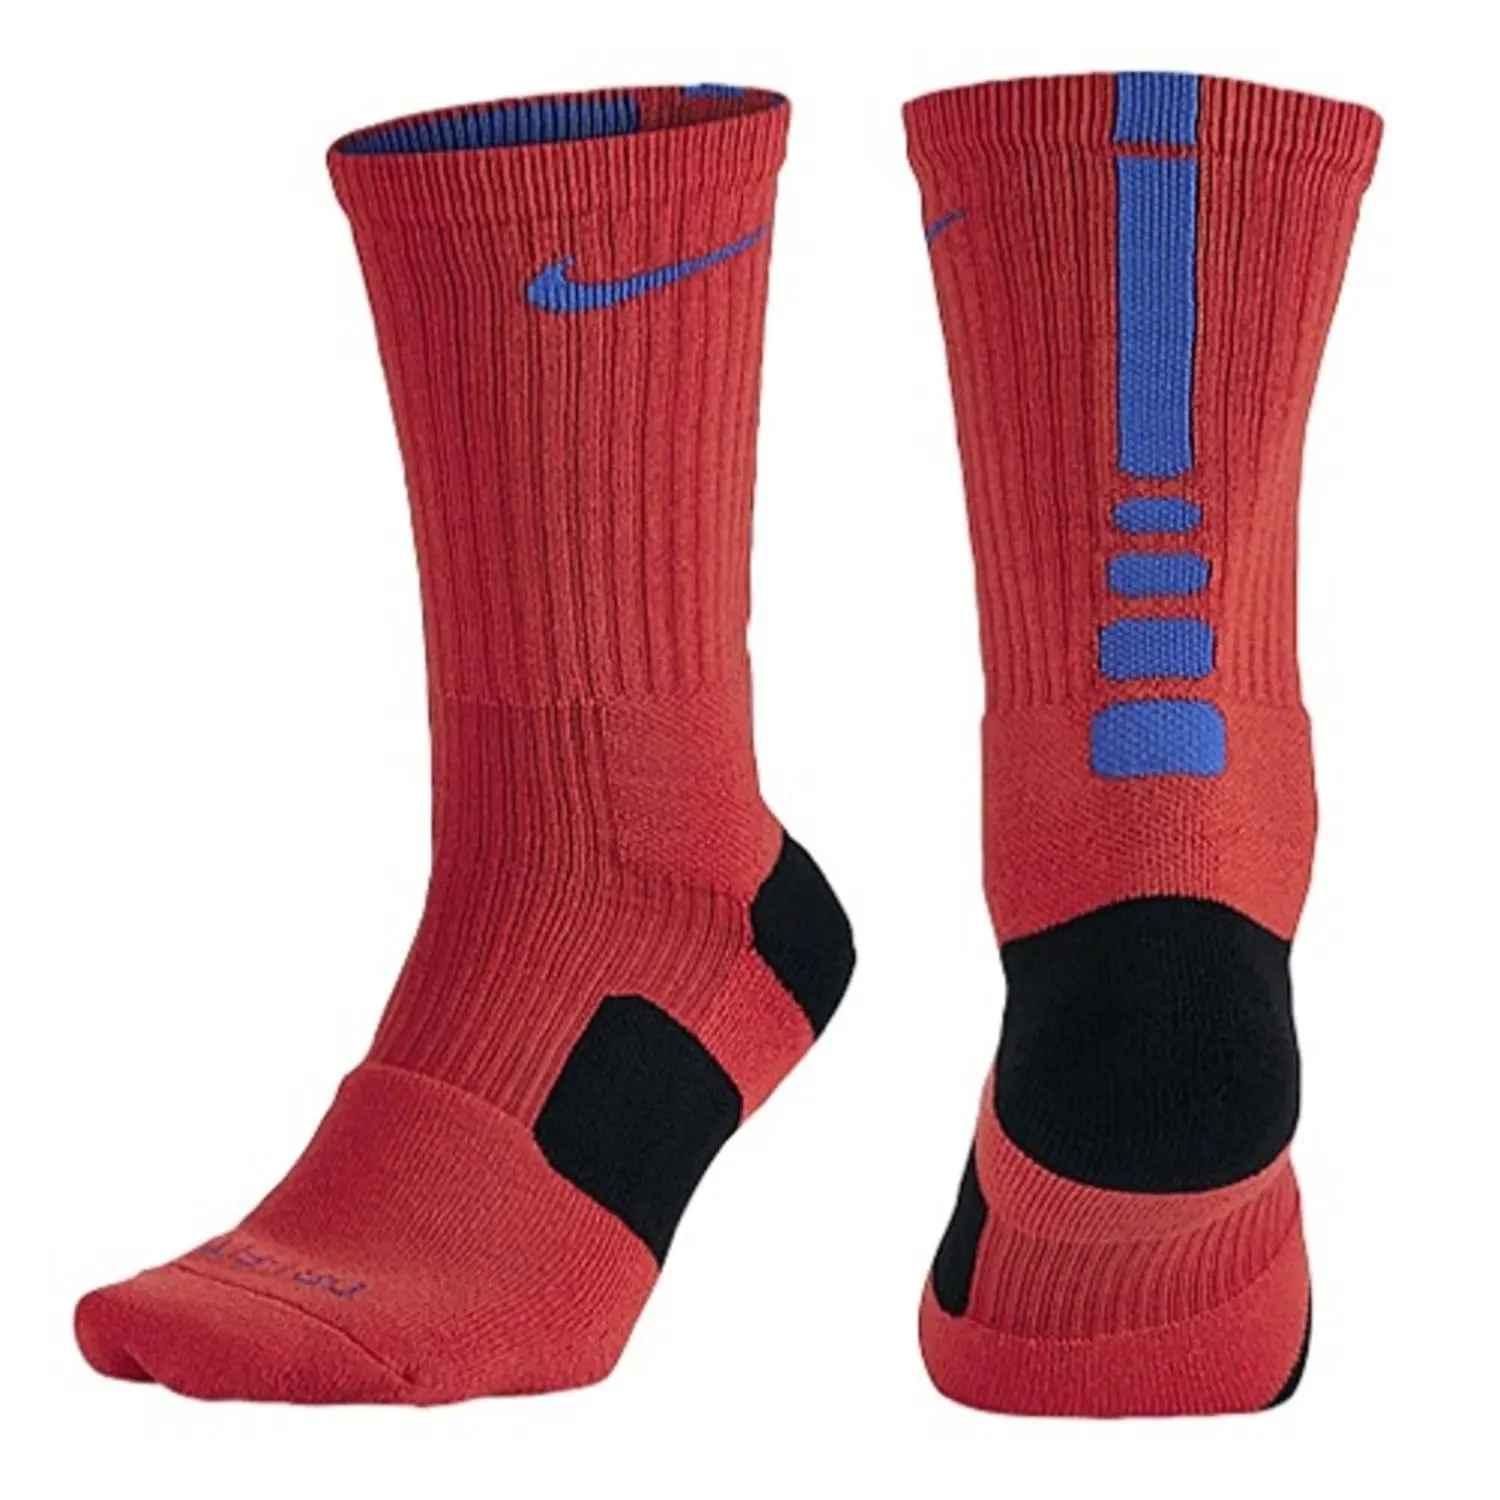 red and white nike elite socks